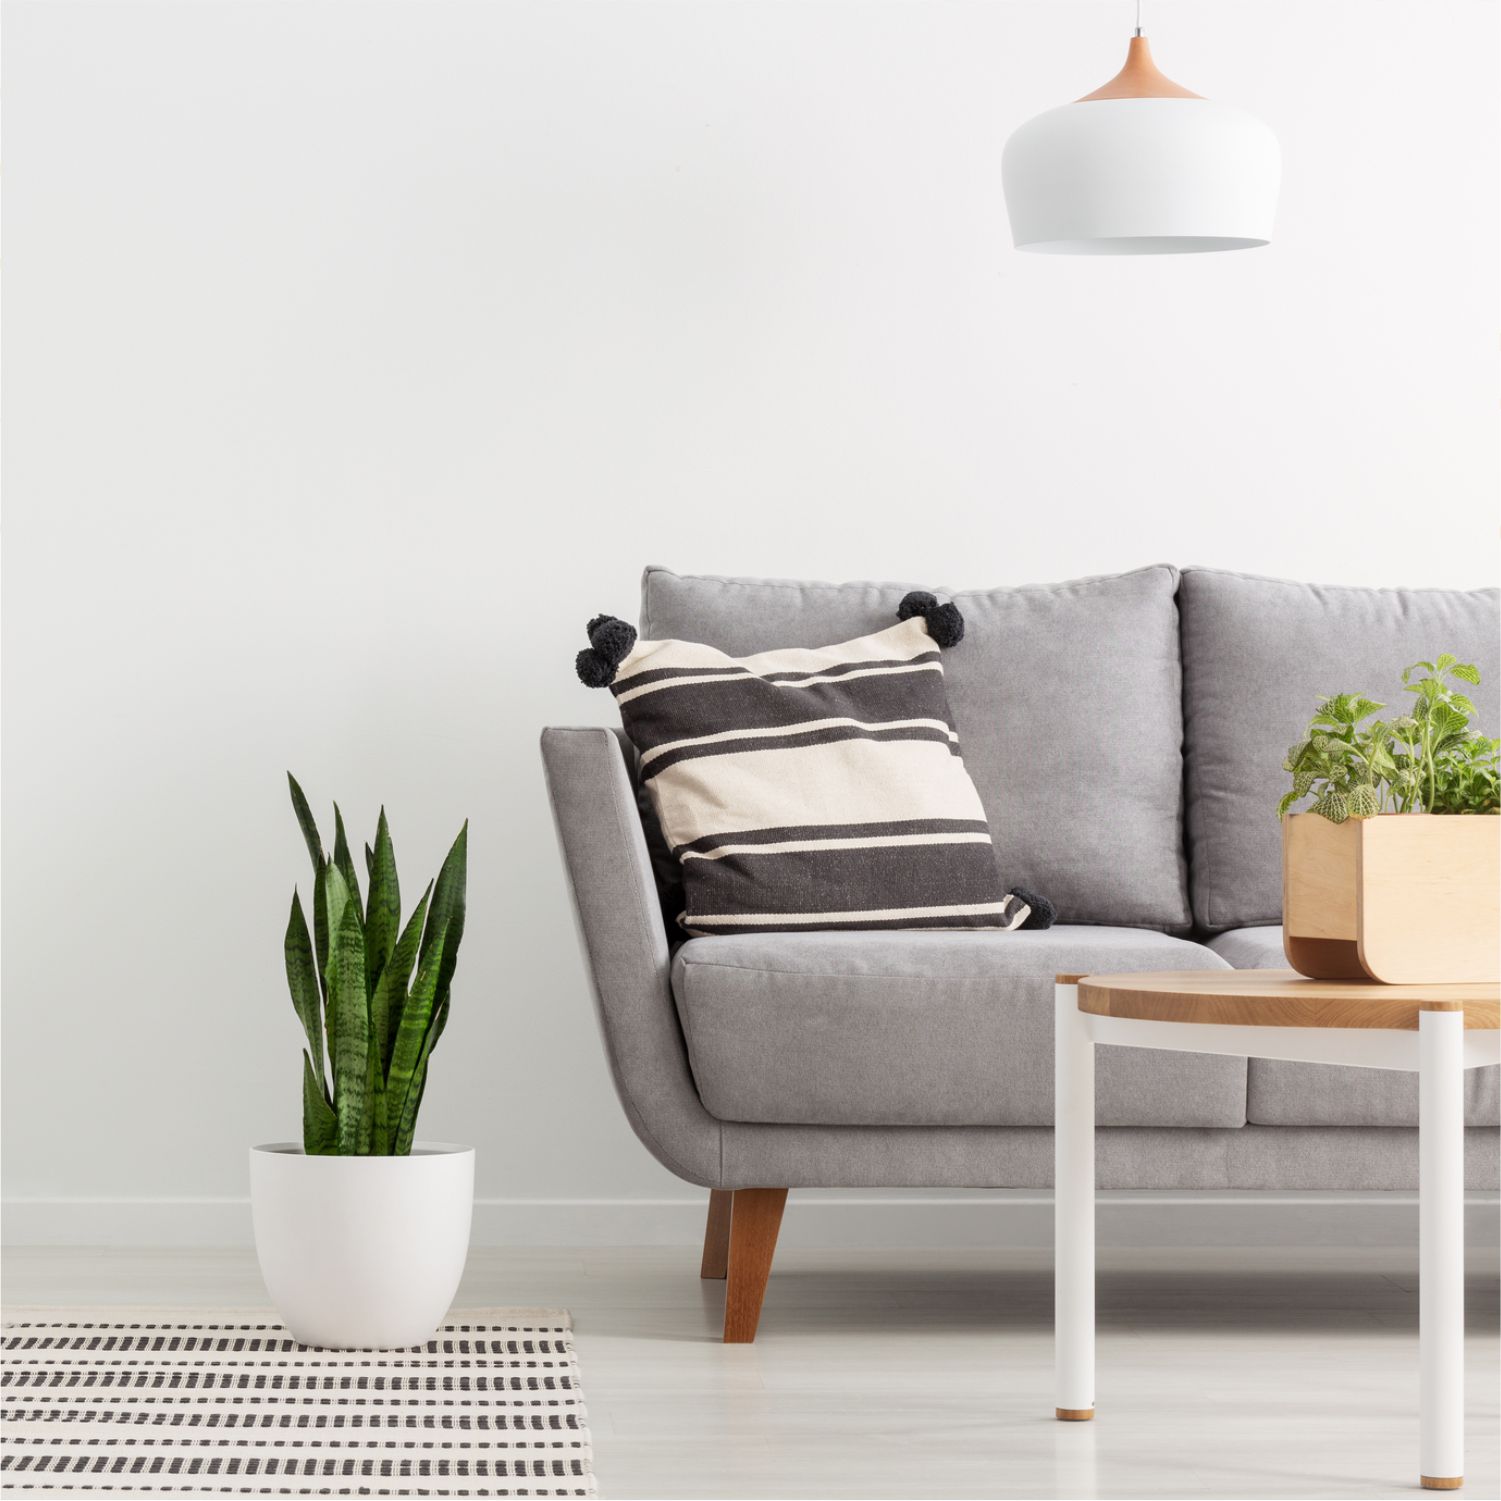 2022 decorating trends - vintage furniture, simplistic